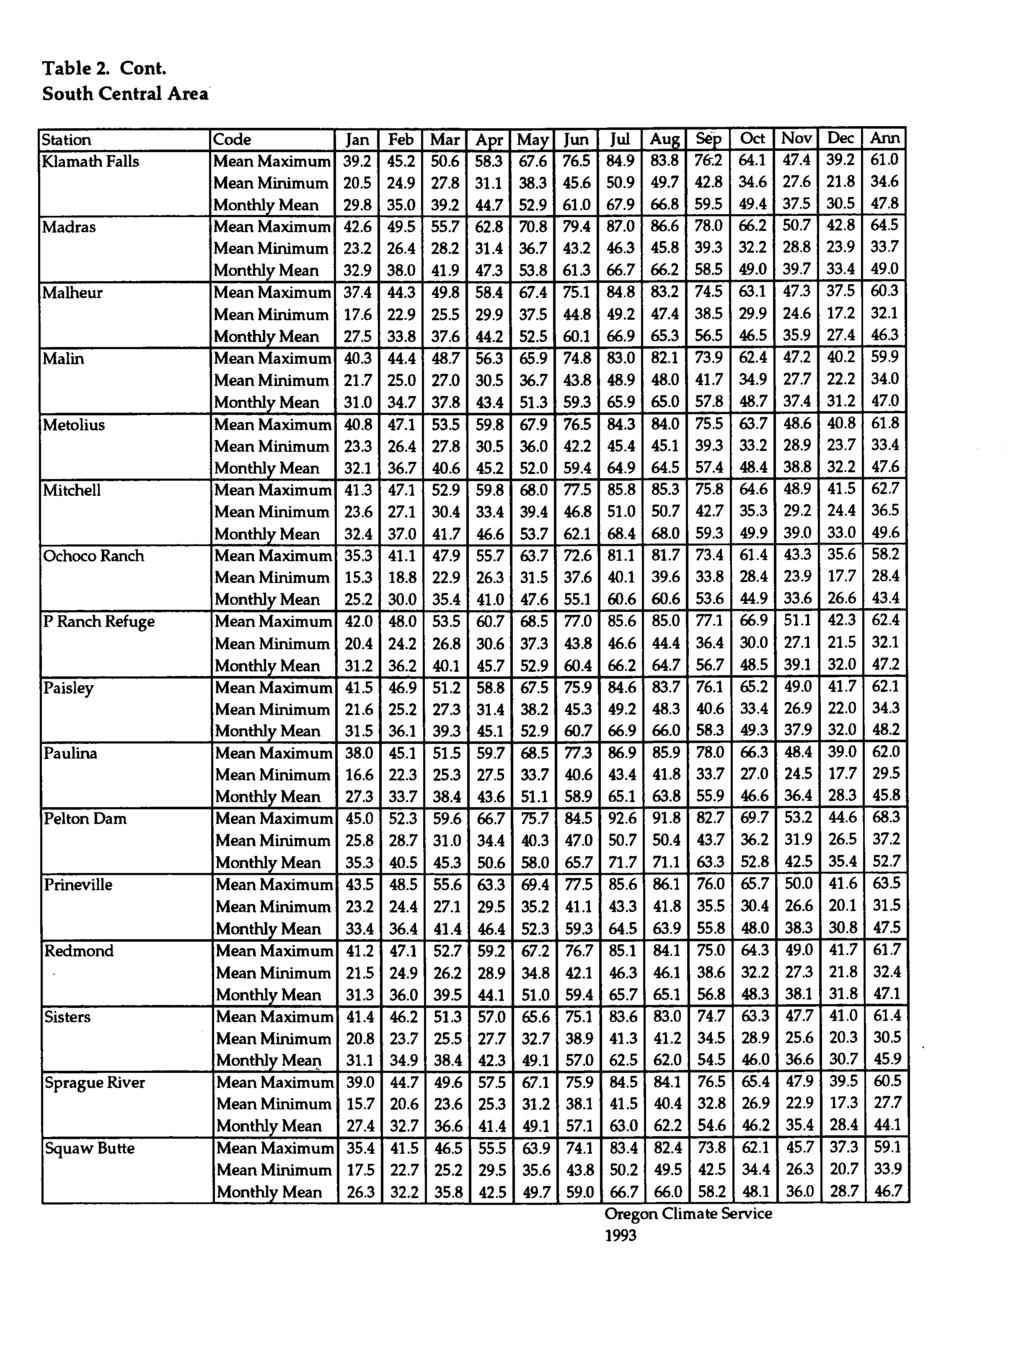 Table 2. Cont. Station Code Jan Feb Mar Apr May Jun Jul Aug Sep Oct Nov Dec Ann - Klamath Falls Mean Maximum 39.2 45.2 50.6 58.3 67.6 76.5 84.9 83.8 76.2 64.1 47.4 39.2 61.0 Mean Minimum 20.5 24.9 27.